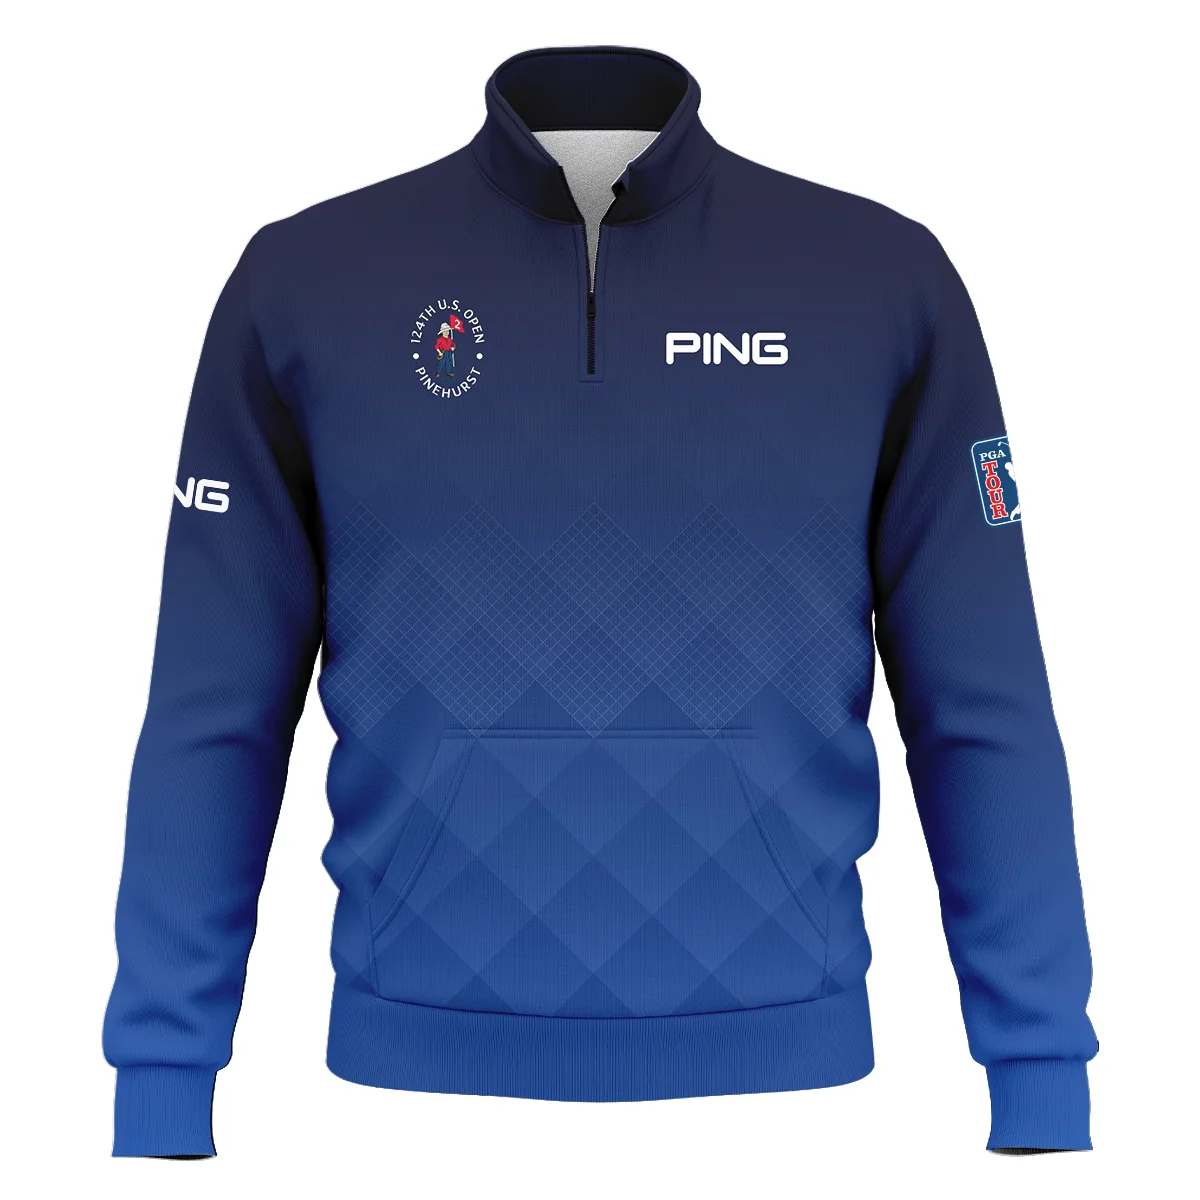 124th U.S. Open Pinehurst Ping Dark Blue Gradient Stripes Pattern Sleeveless Jacket Style Classic Sleeveless Jacket